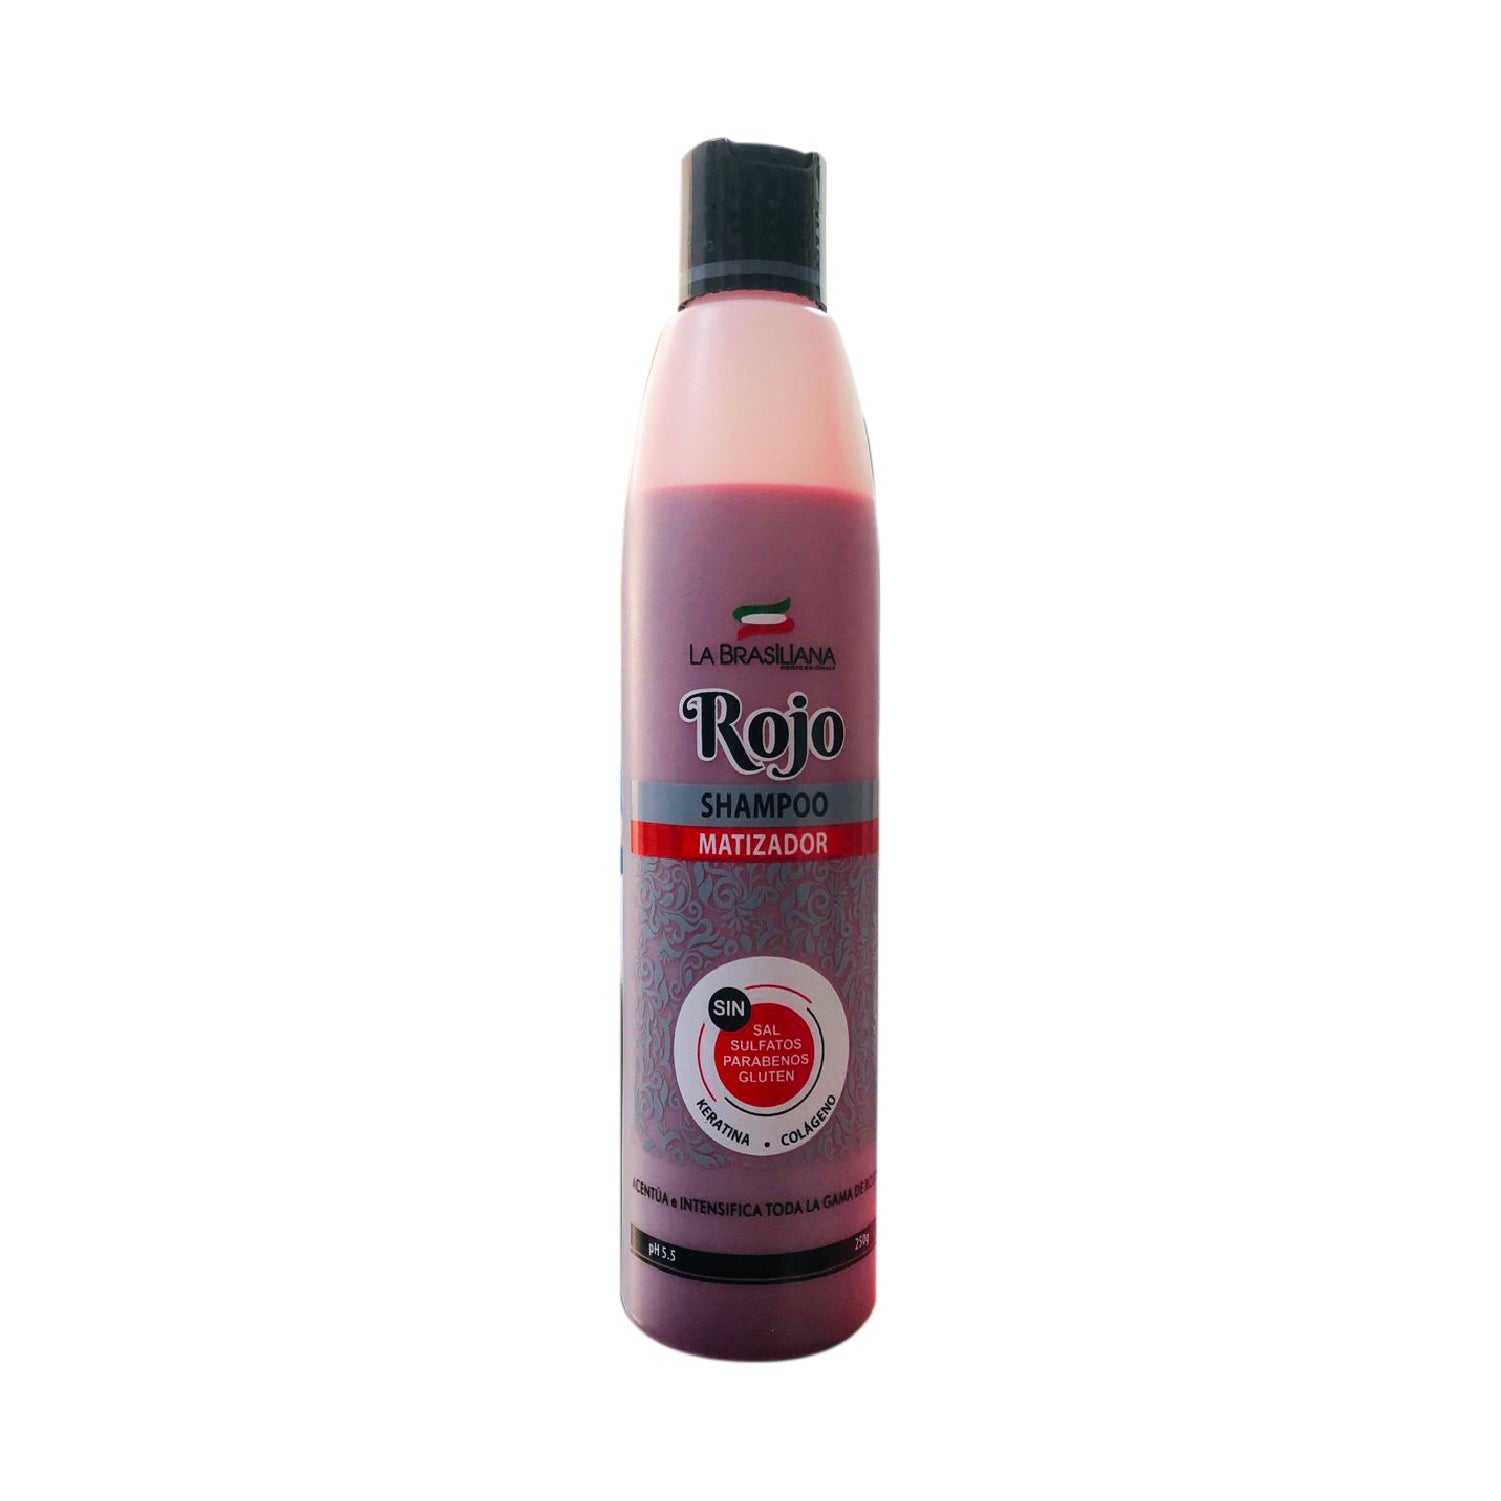 Shampoo Matizador Rojo - La Brasiliana 250gr